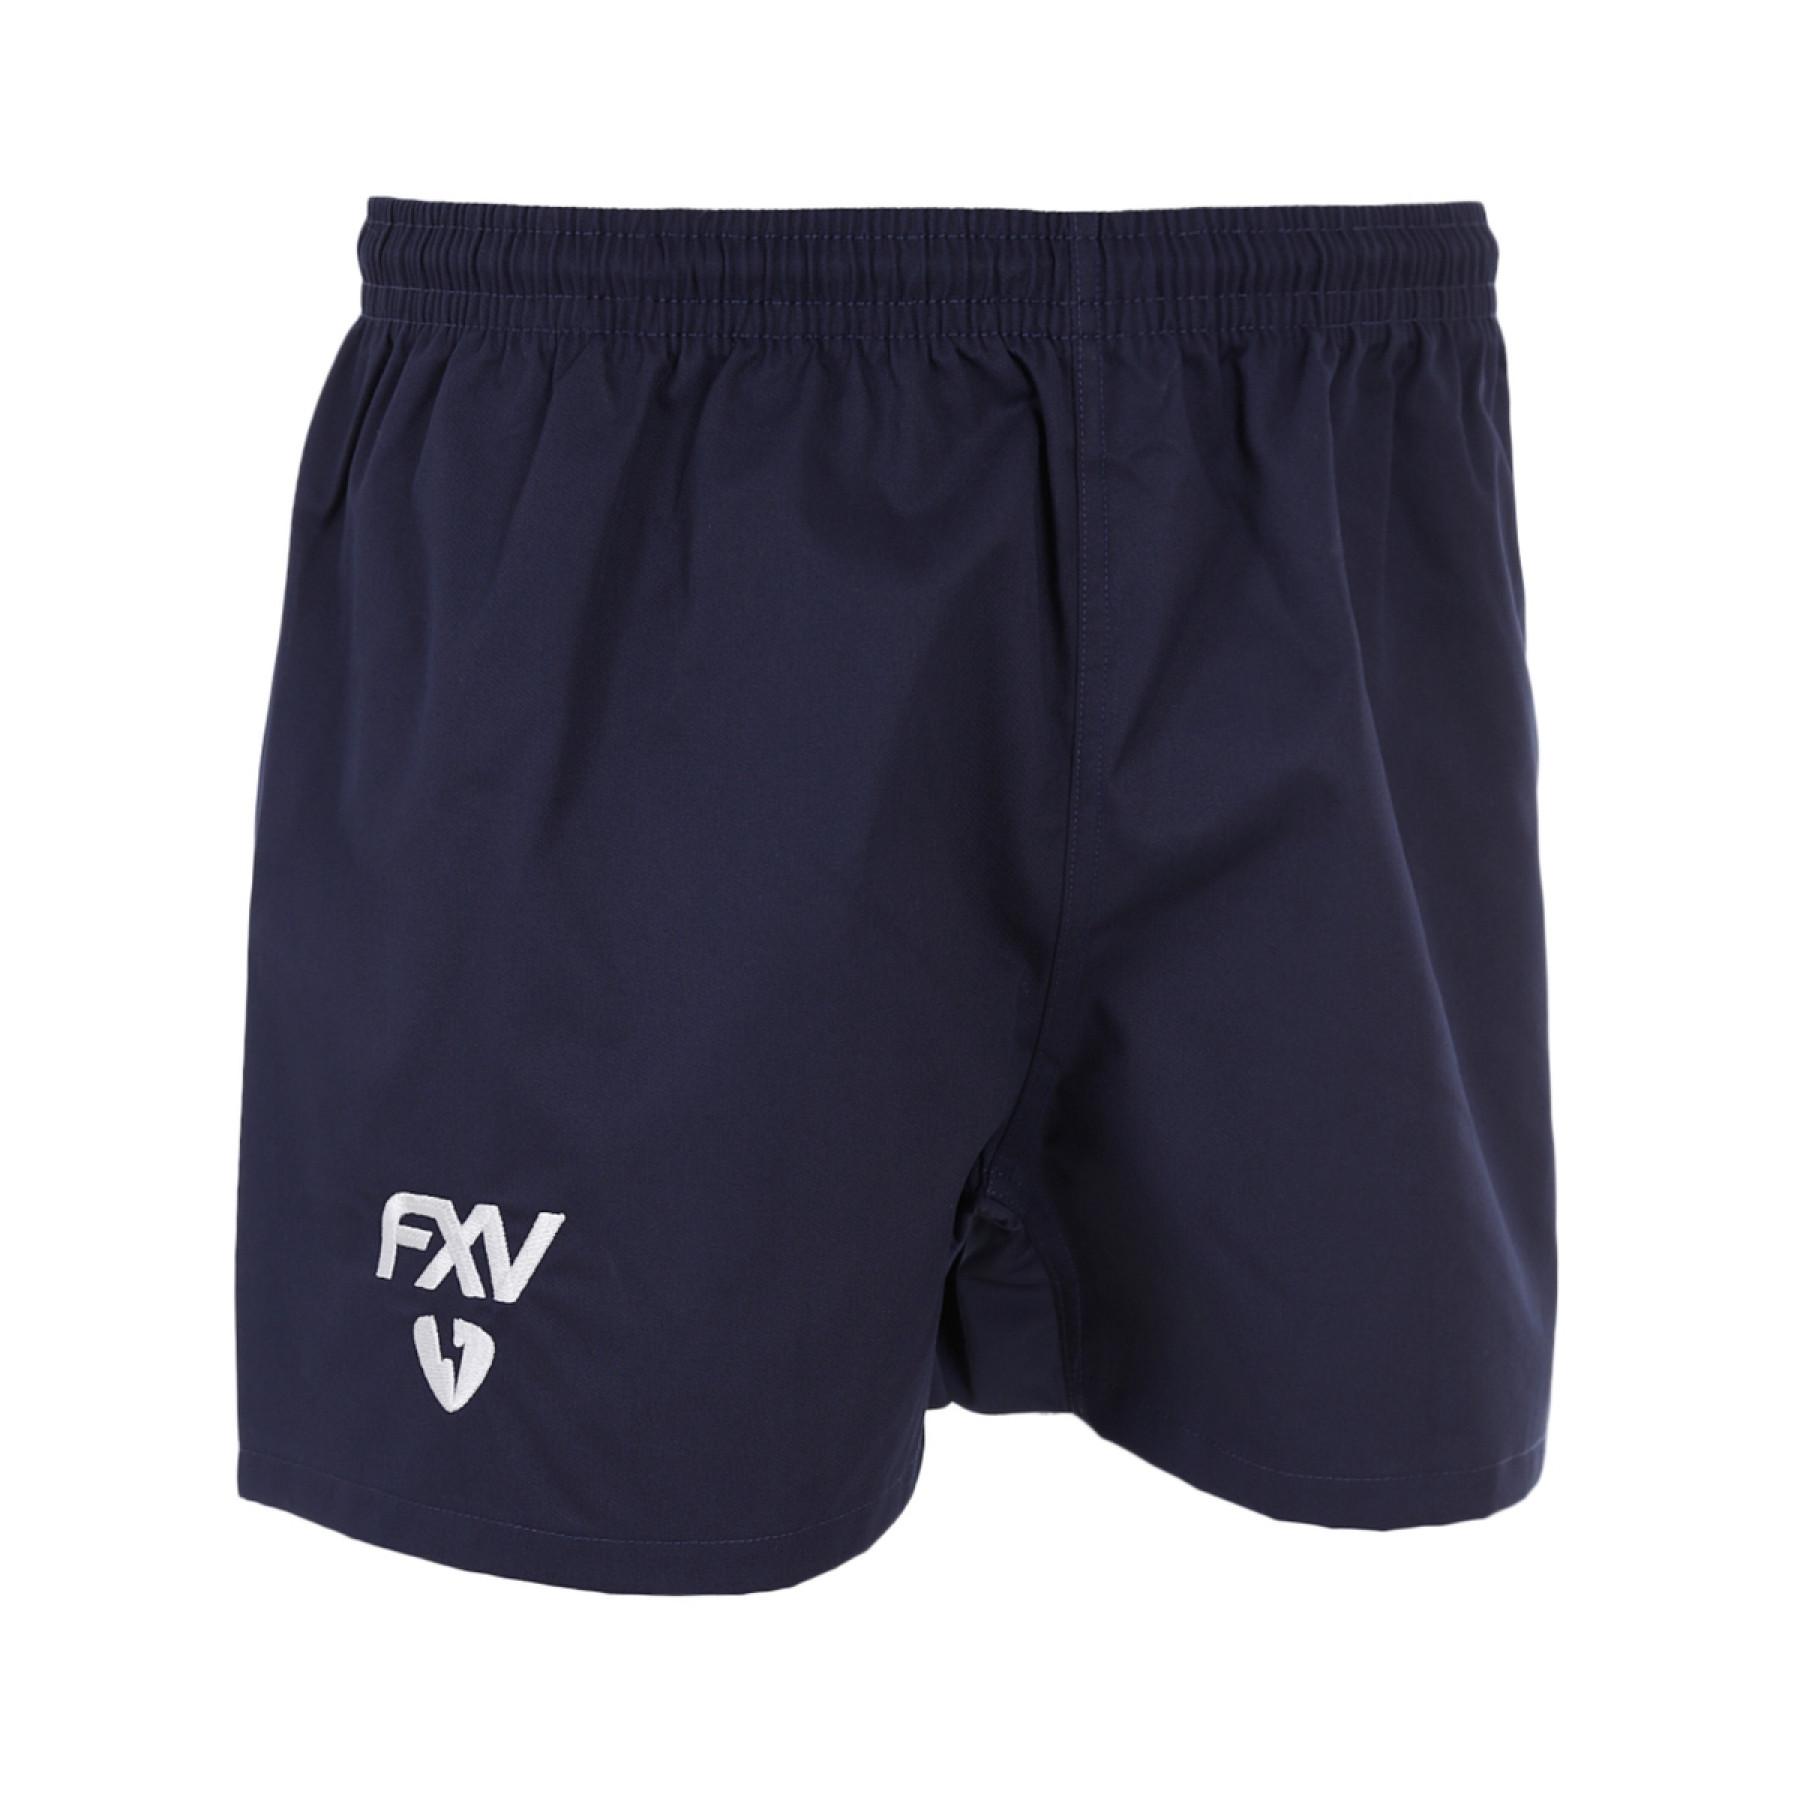 Pantaloncini per bambini Force XV pixy